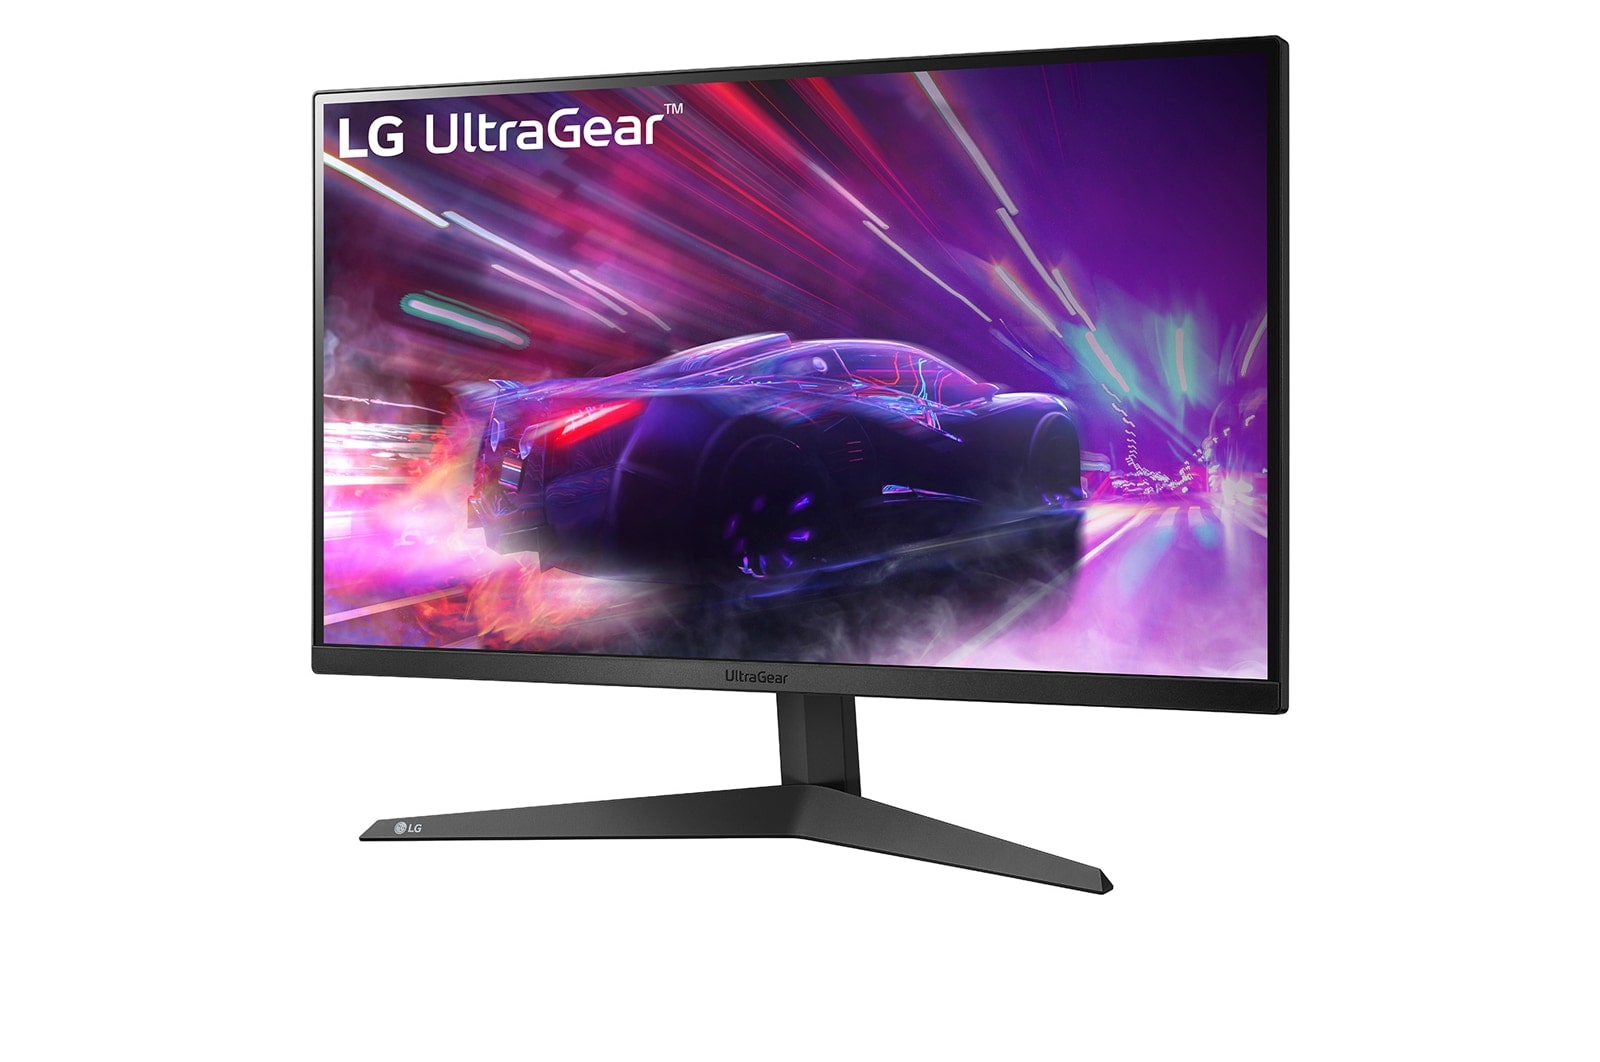 LG 27” UltraGear™ Full HD Gaming Monitor